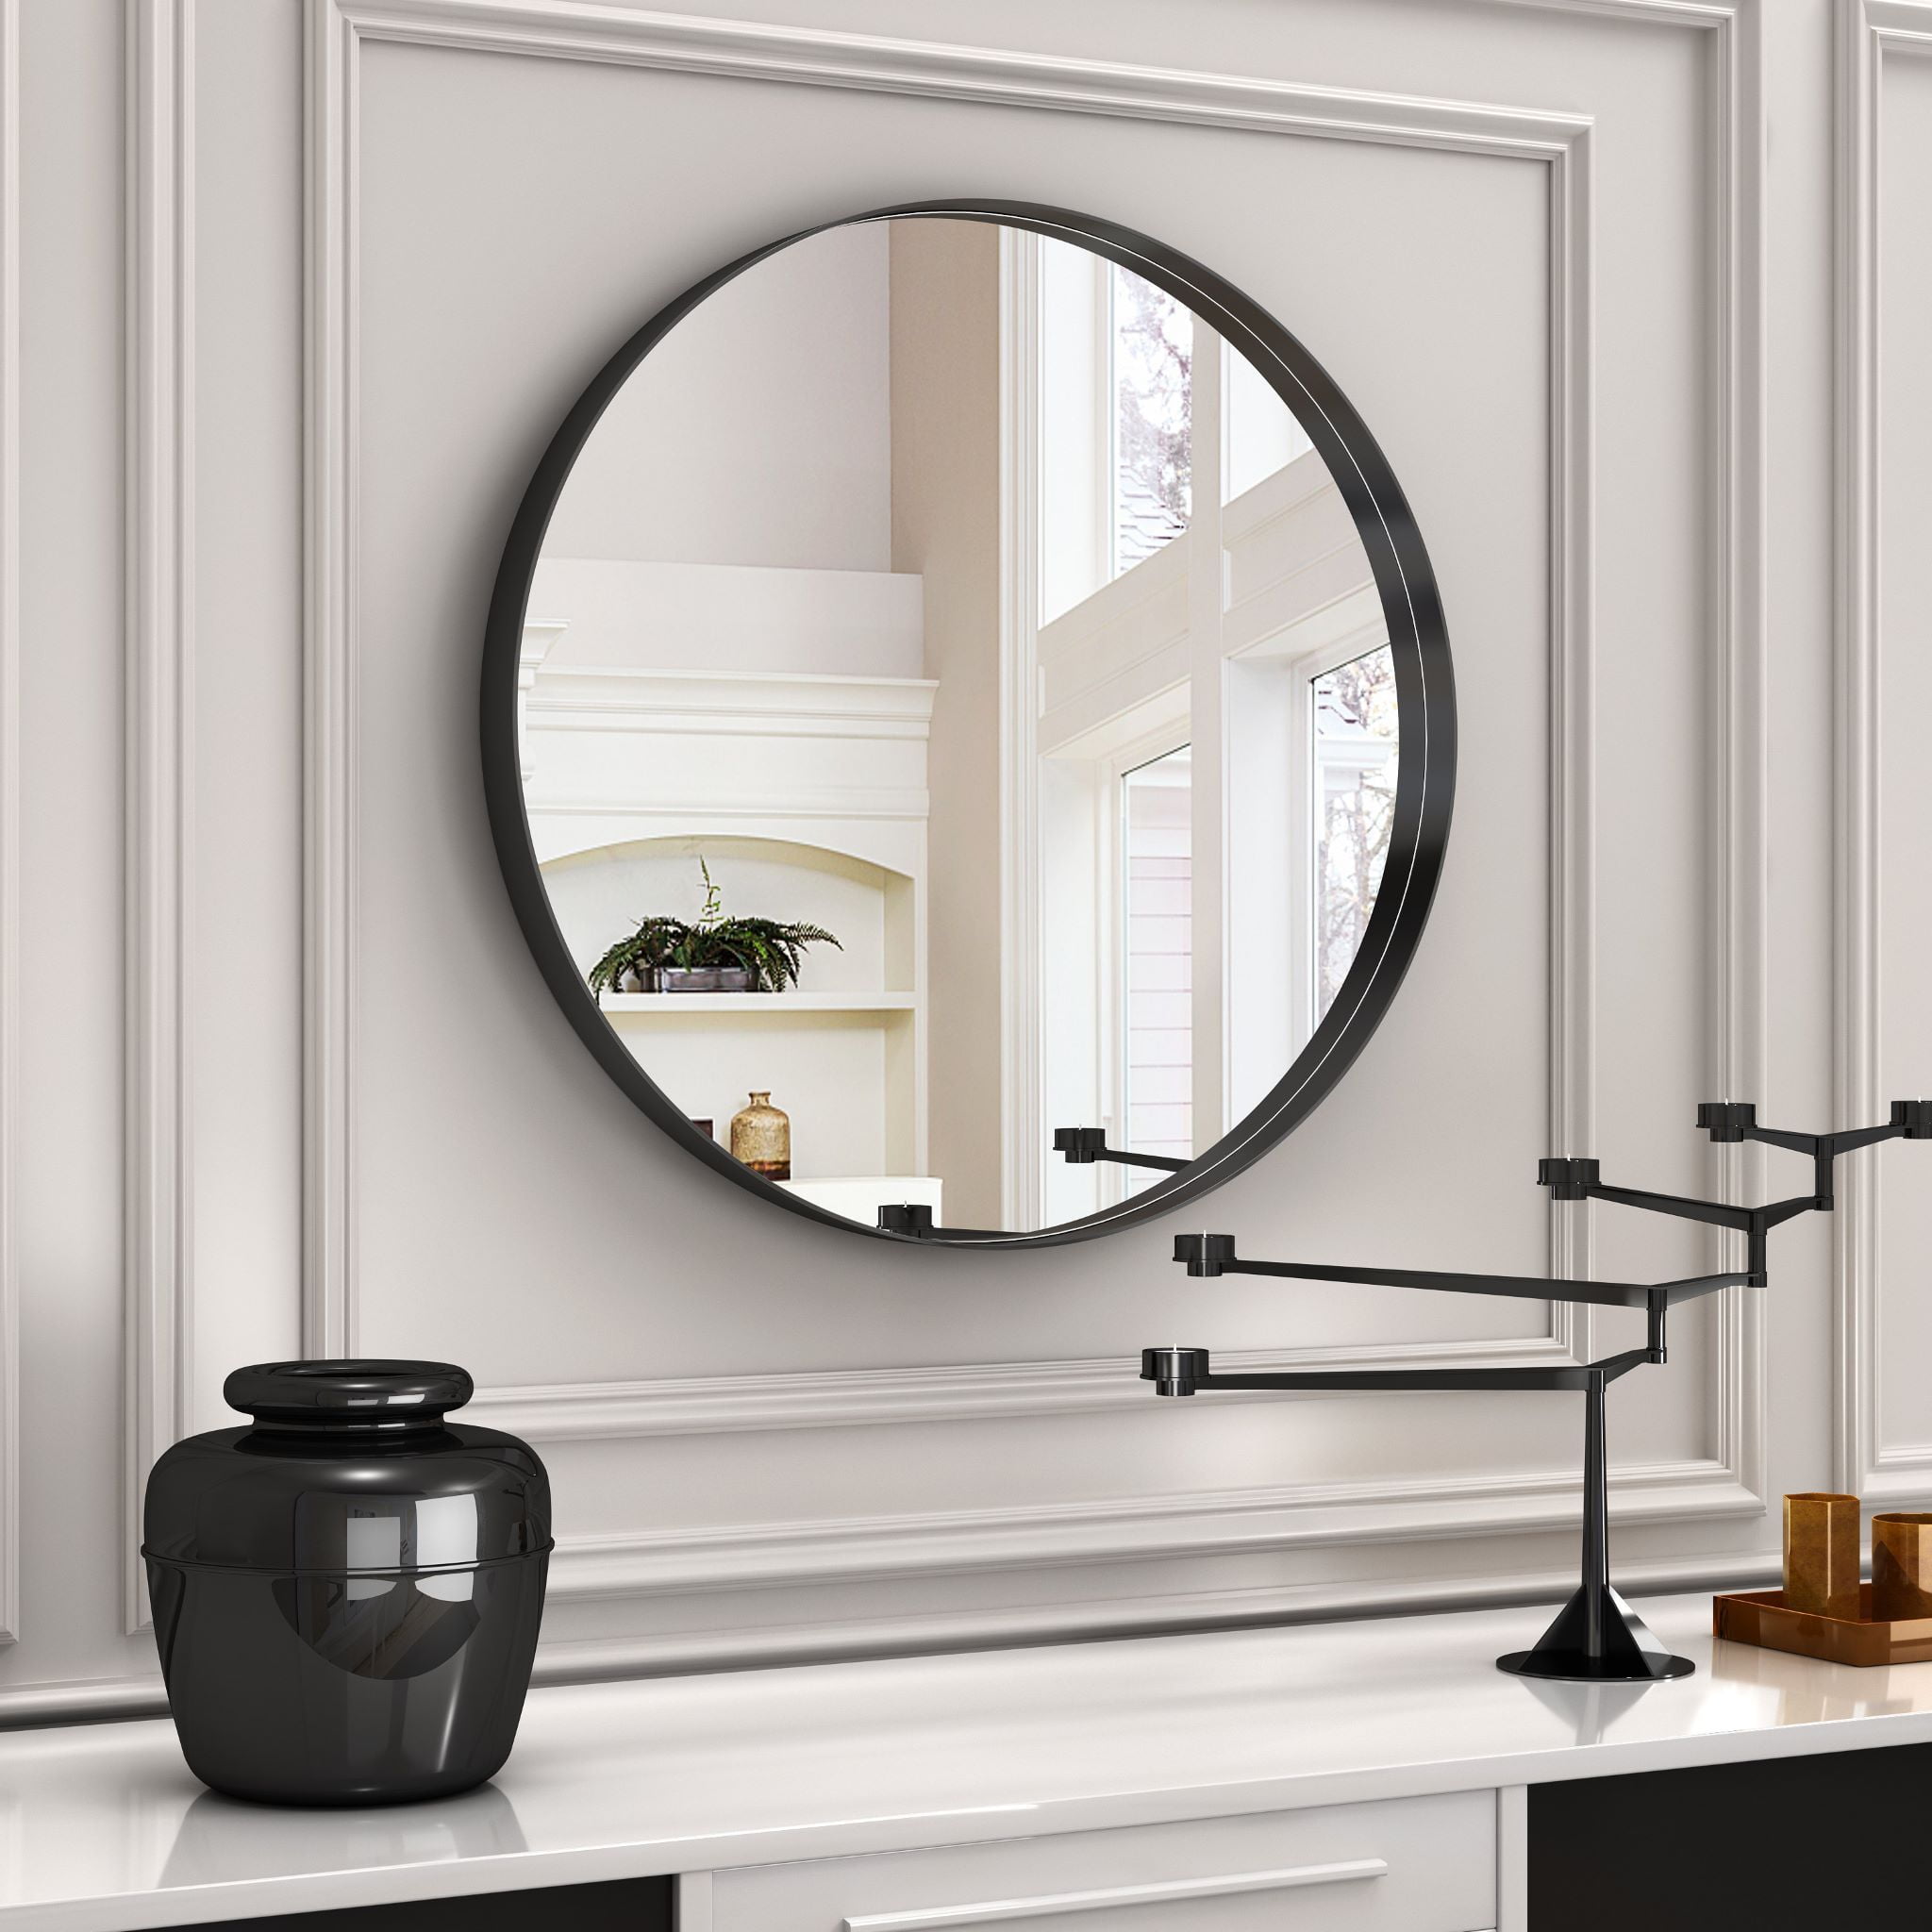 Wooden Mirror Wall Mirror Toilet Mirror Mirrored Jewelry Gift for Her Makeup Mirror,Dressing Mirror Round Mirror Housewarming Gift